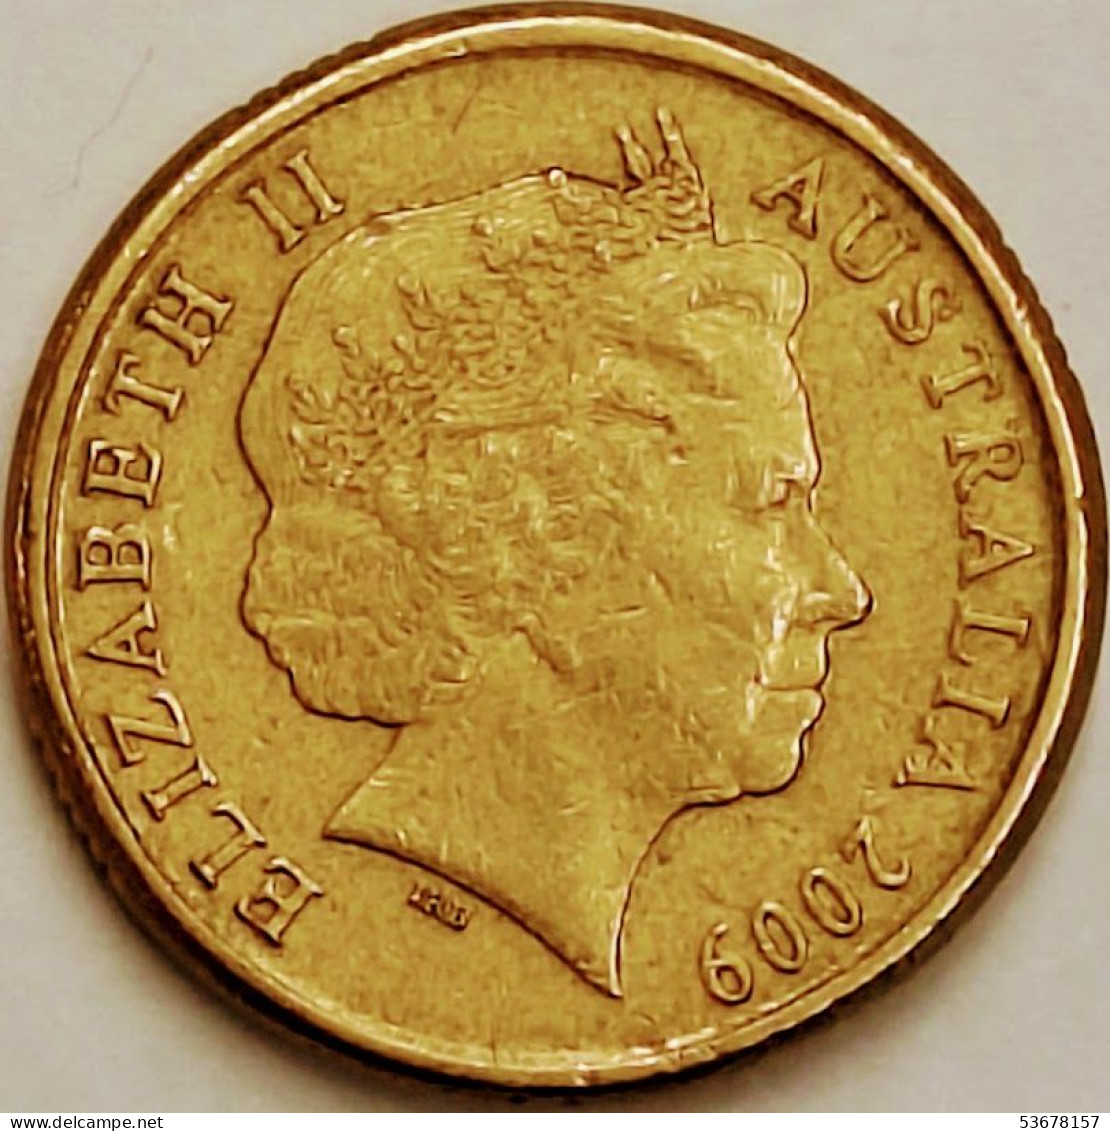 Australia - 2 Dollars 2009, KM# 406 (#2828) - 2 Dollars